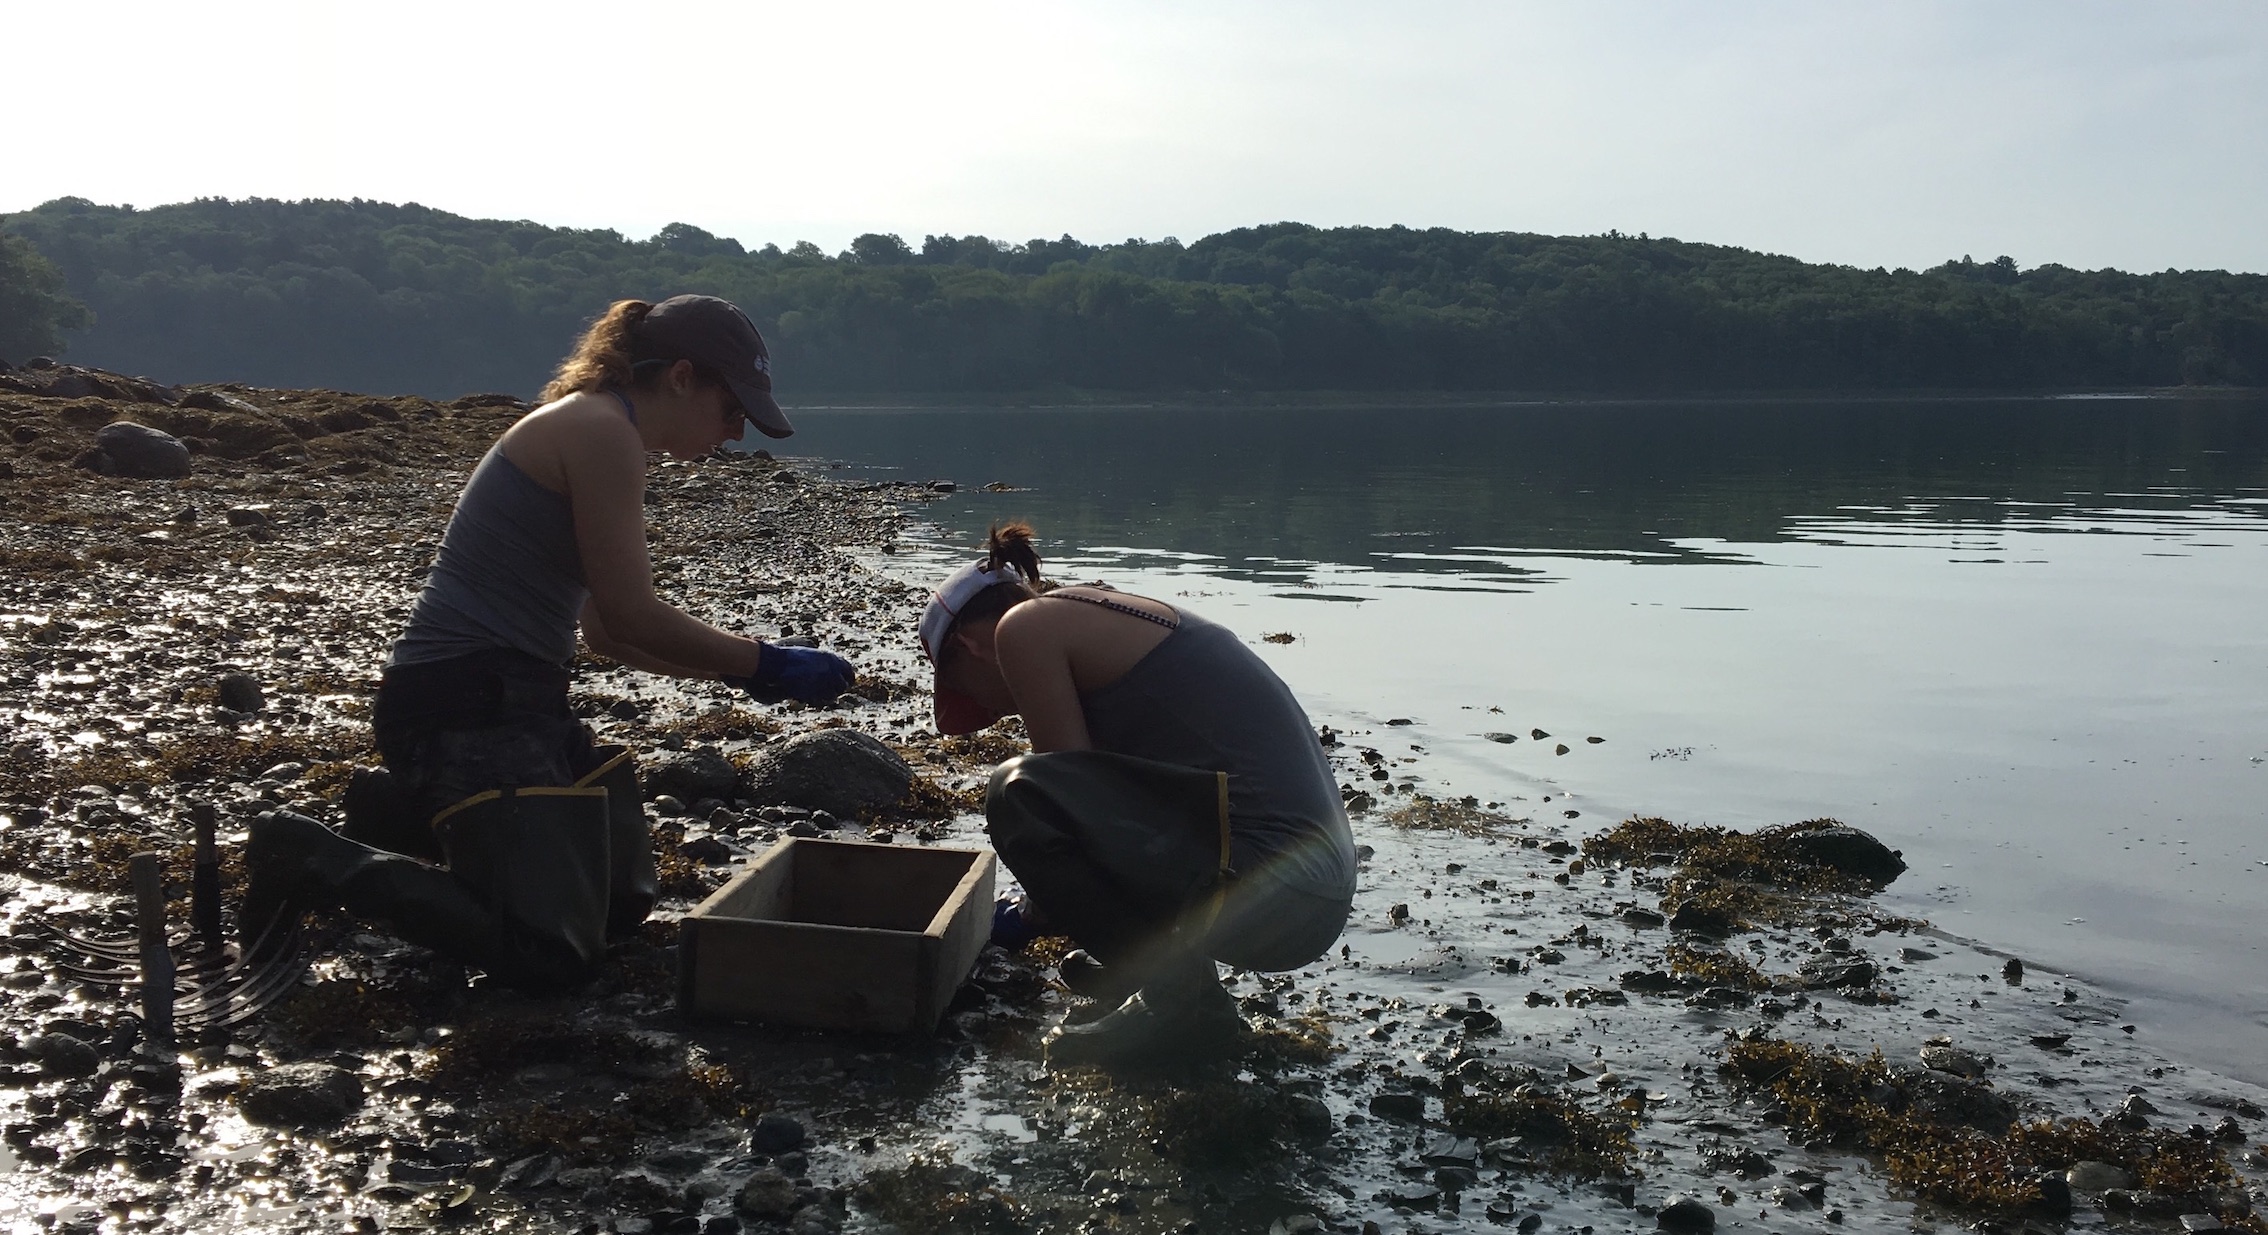 Students sampling clams on mudflat